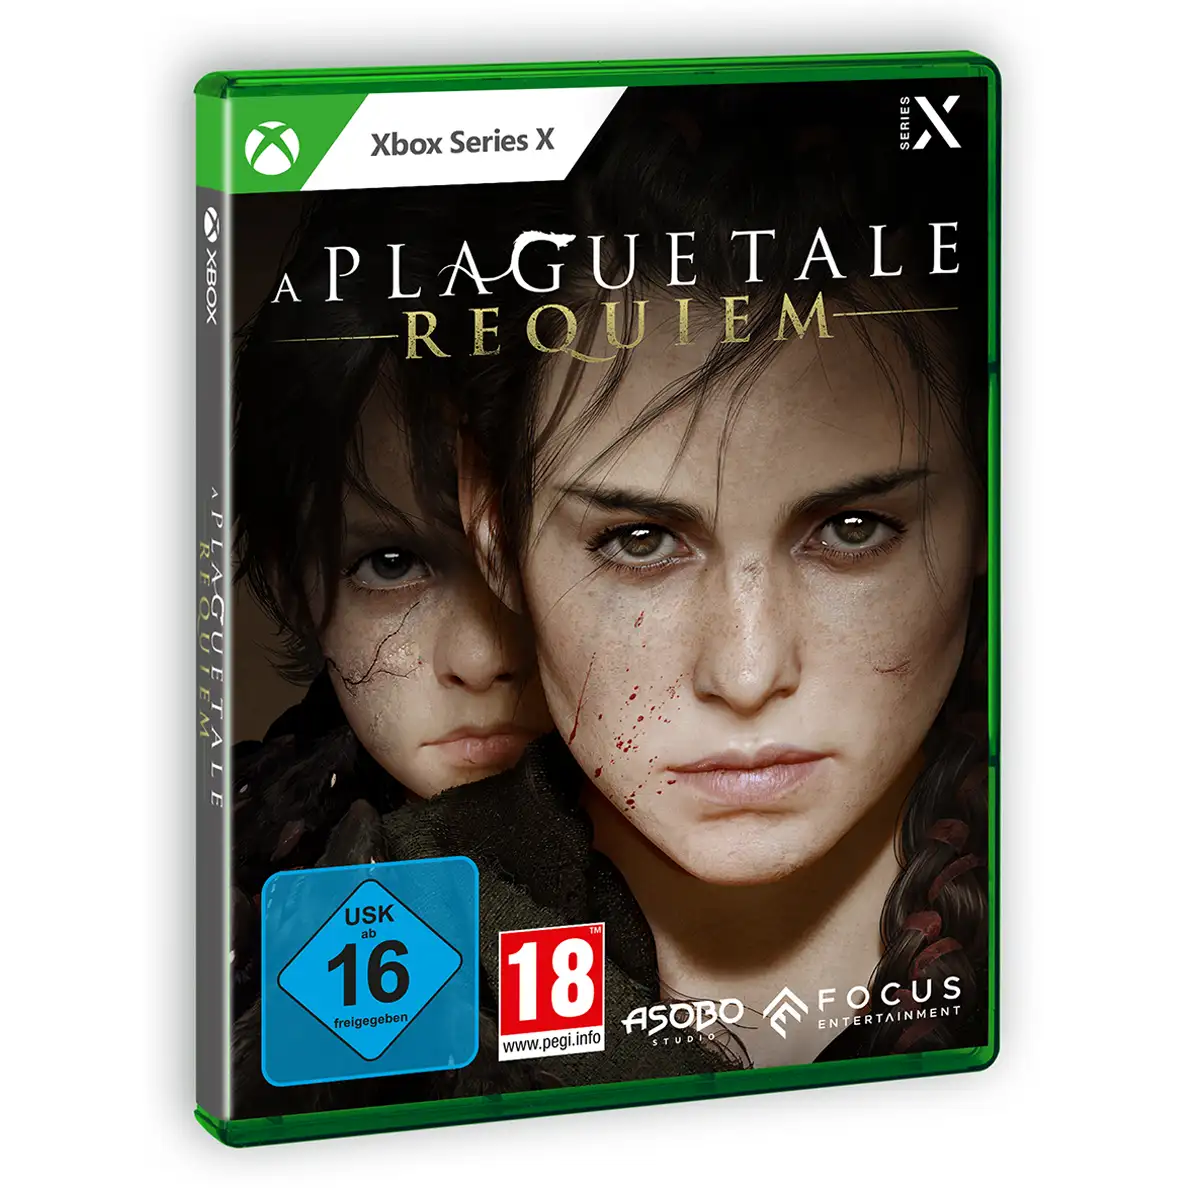 A Plague Tale: Requiem (Xbox Series X) Image 9